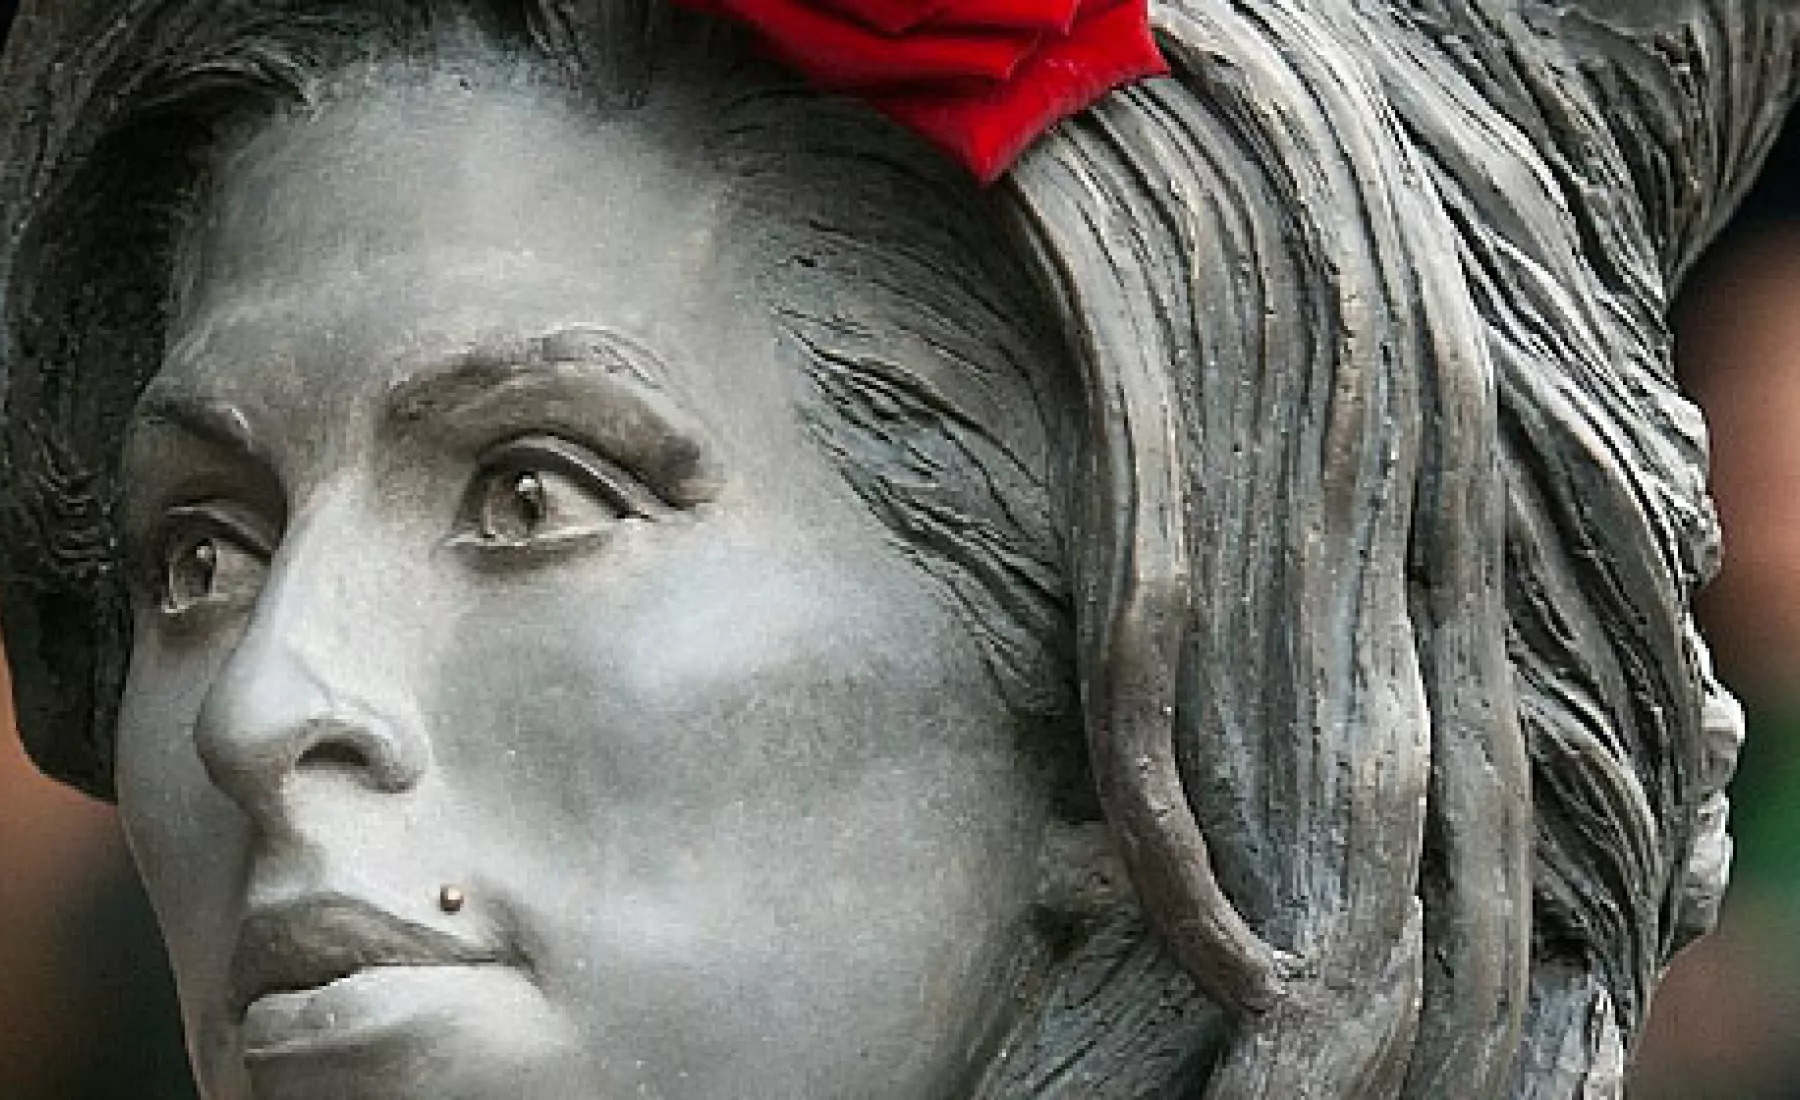 Amy Winehouse Statue